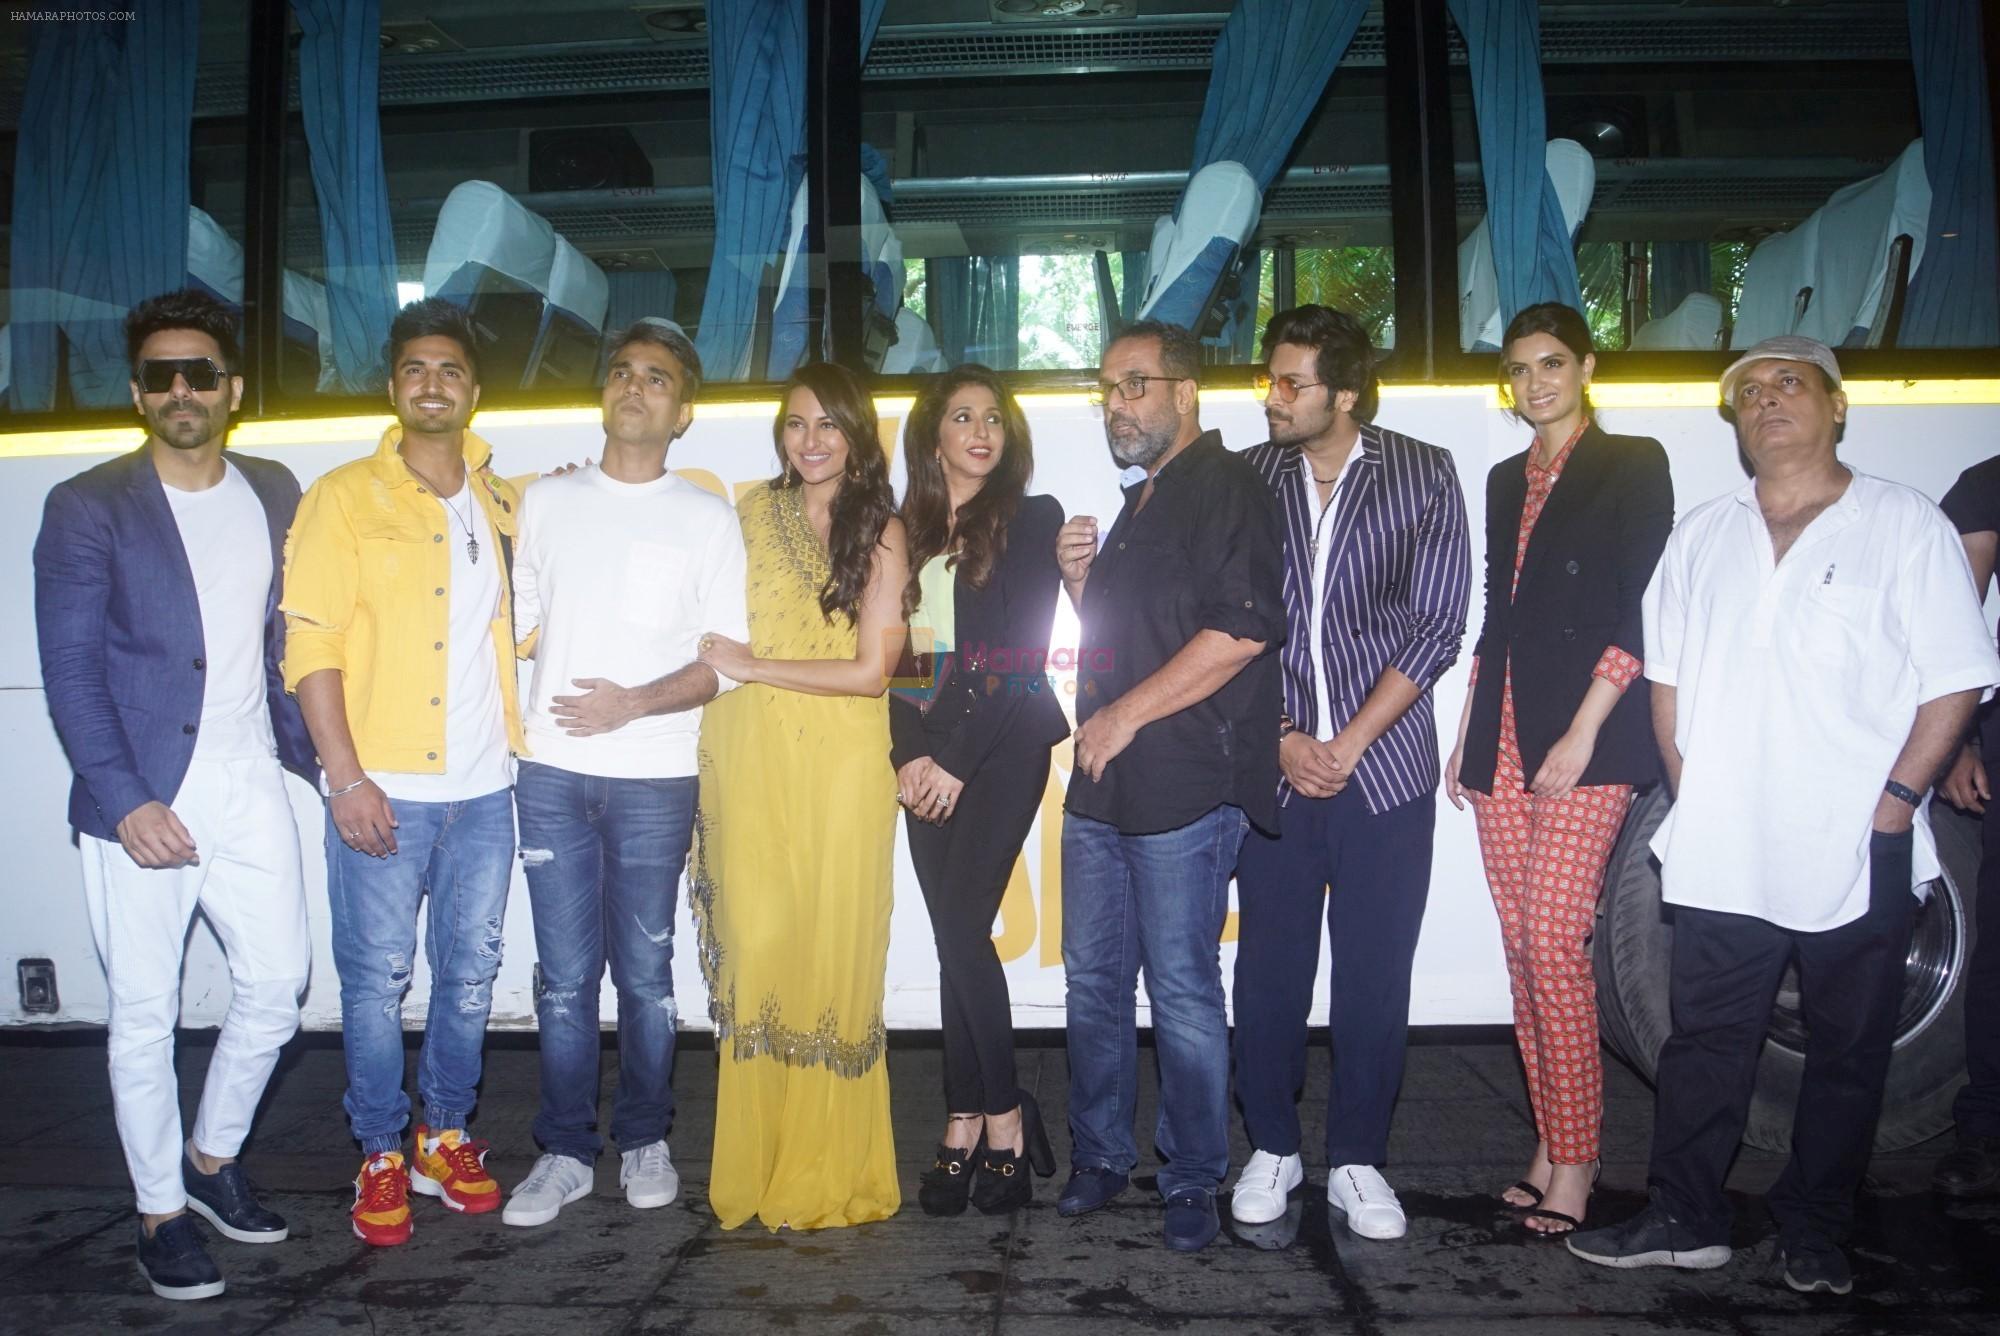 Sonakshi Sinha, Diana Penty, Ali Fazal,Jassi Gill, Aparshakti Khurana, Krishika Lulla, Anand L Rai, Mudassar Aziz at the trailer launch of happy phirr bhag jayegi on 25th July 2018